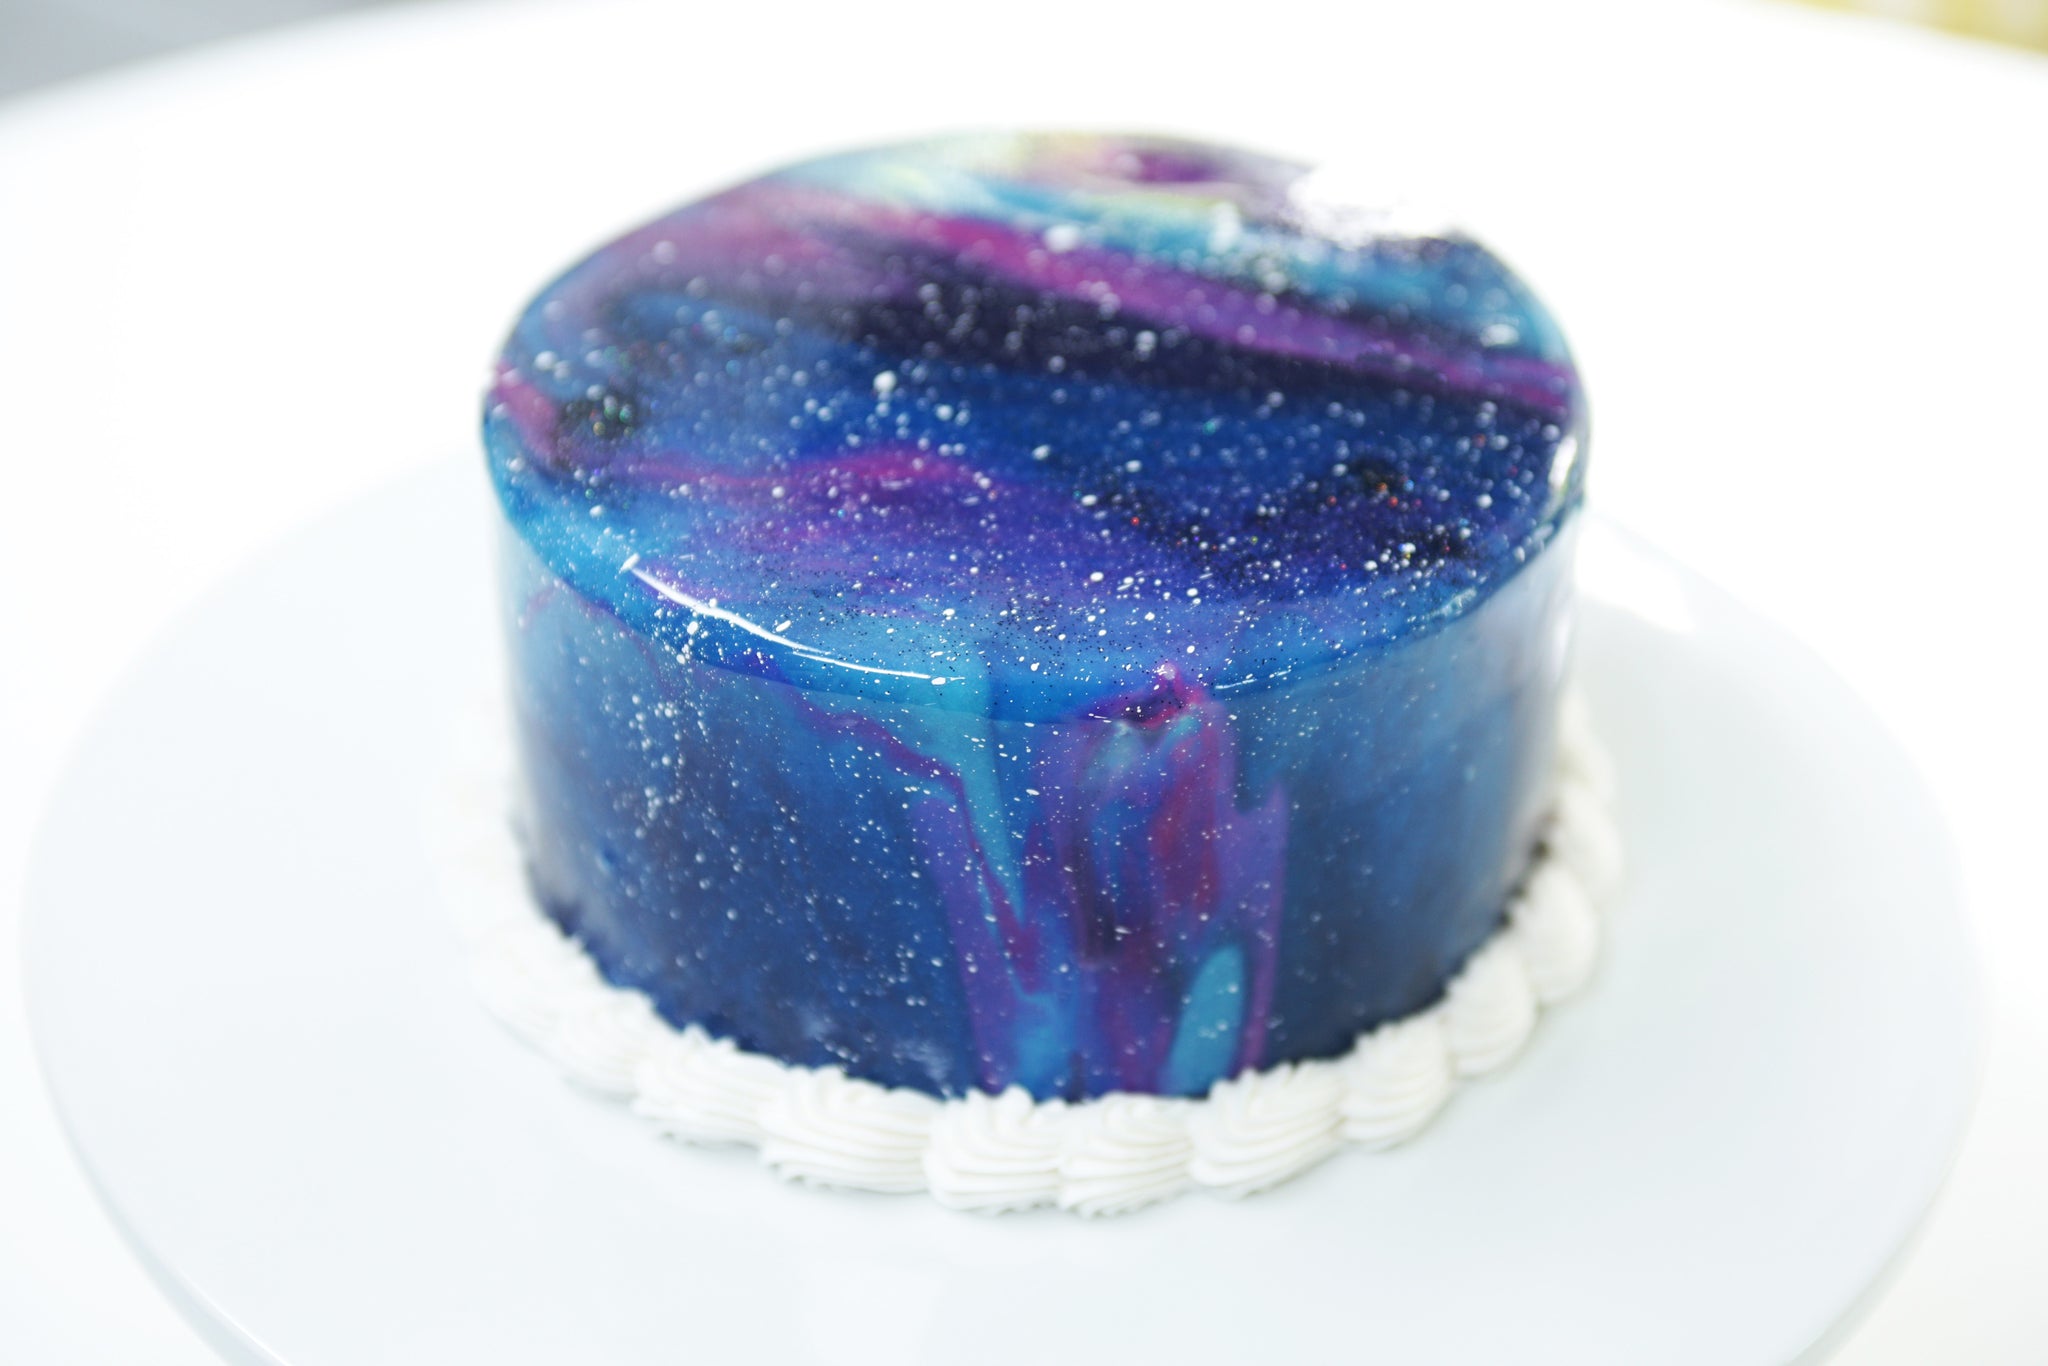 Mirror glazed cake - Decorated Cake by Samyukta - CakesDecor